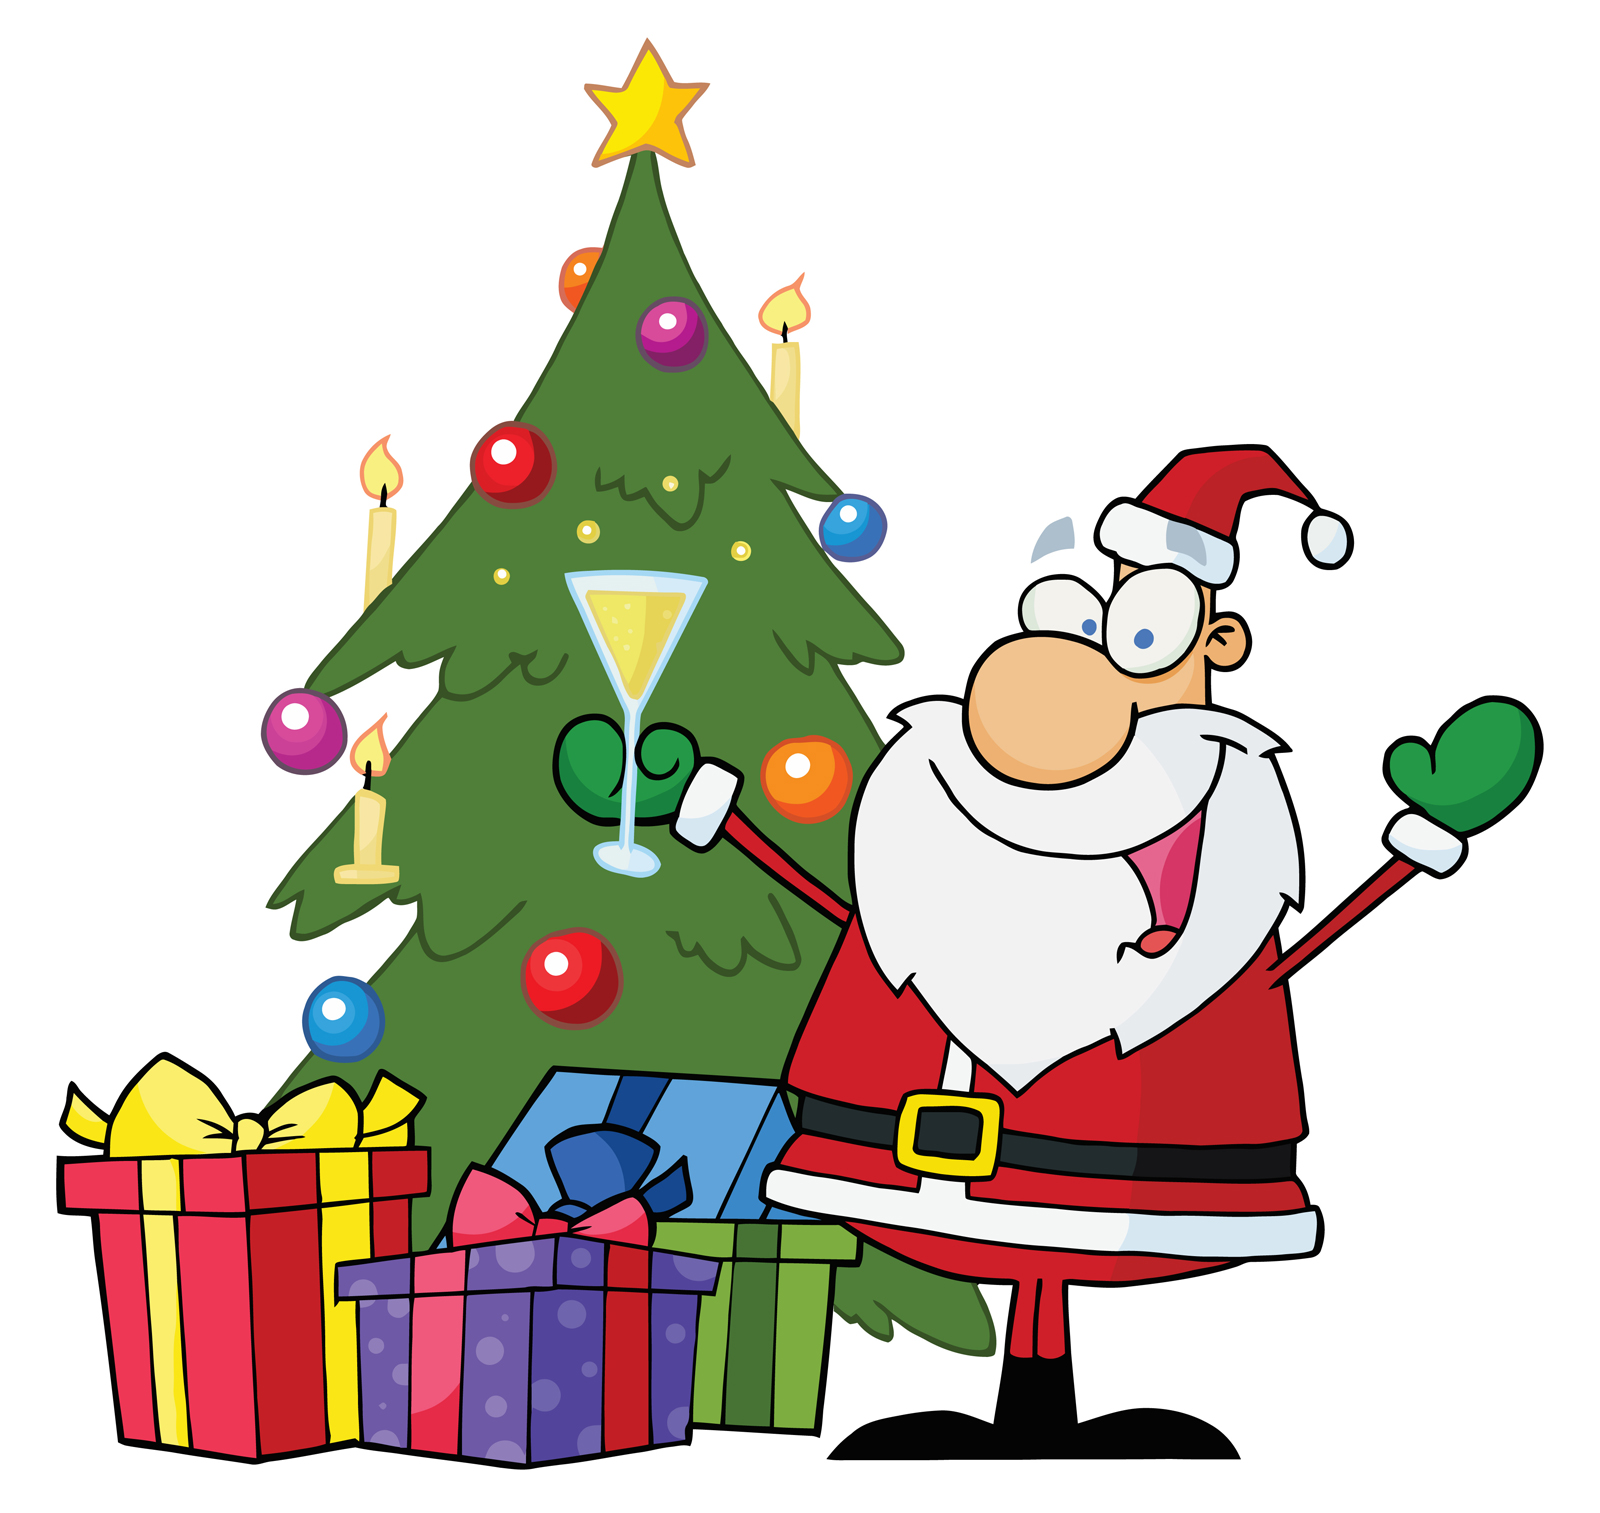 Christmas tree shop - Chrsitmstoy store clip art - Clipart Present ...